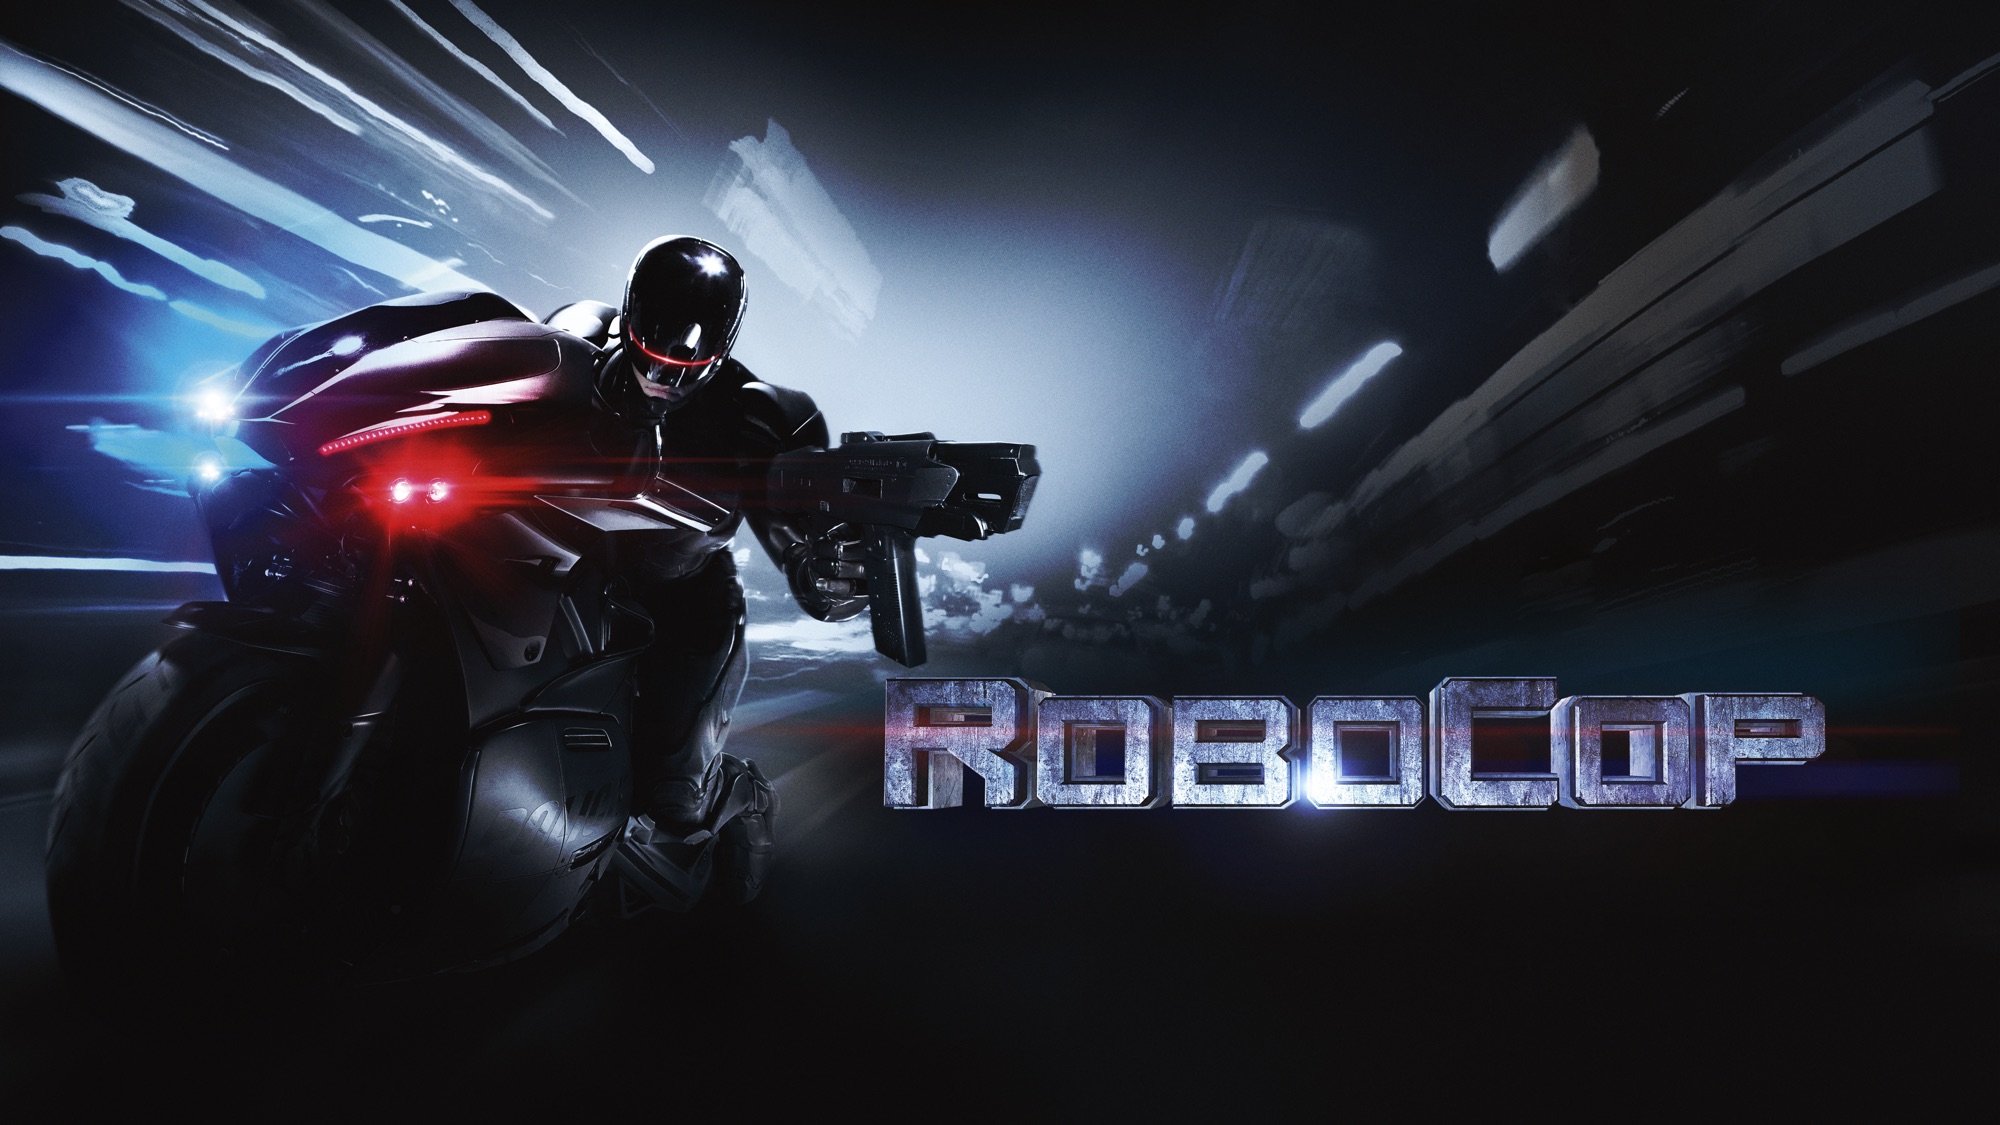 495377 Bild herunterladen filme, robo cop (2014), robocop - Hintergrundbilder und Bildschirmschoner kostenlos